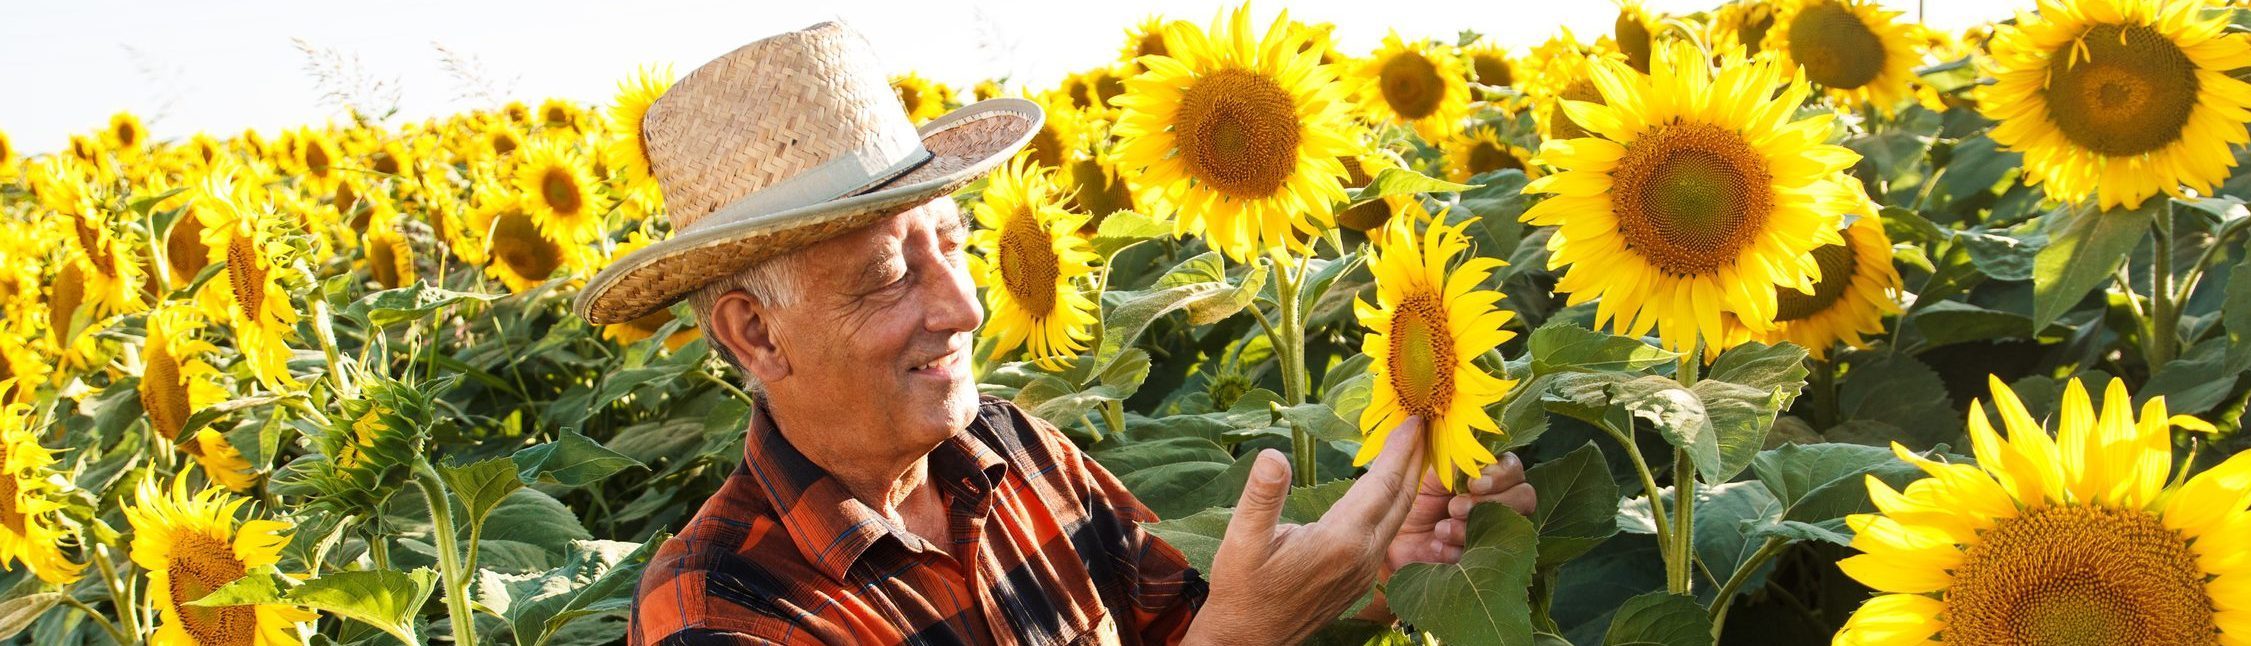 Senior farmer examining crop of sunflowers in field